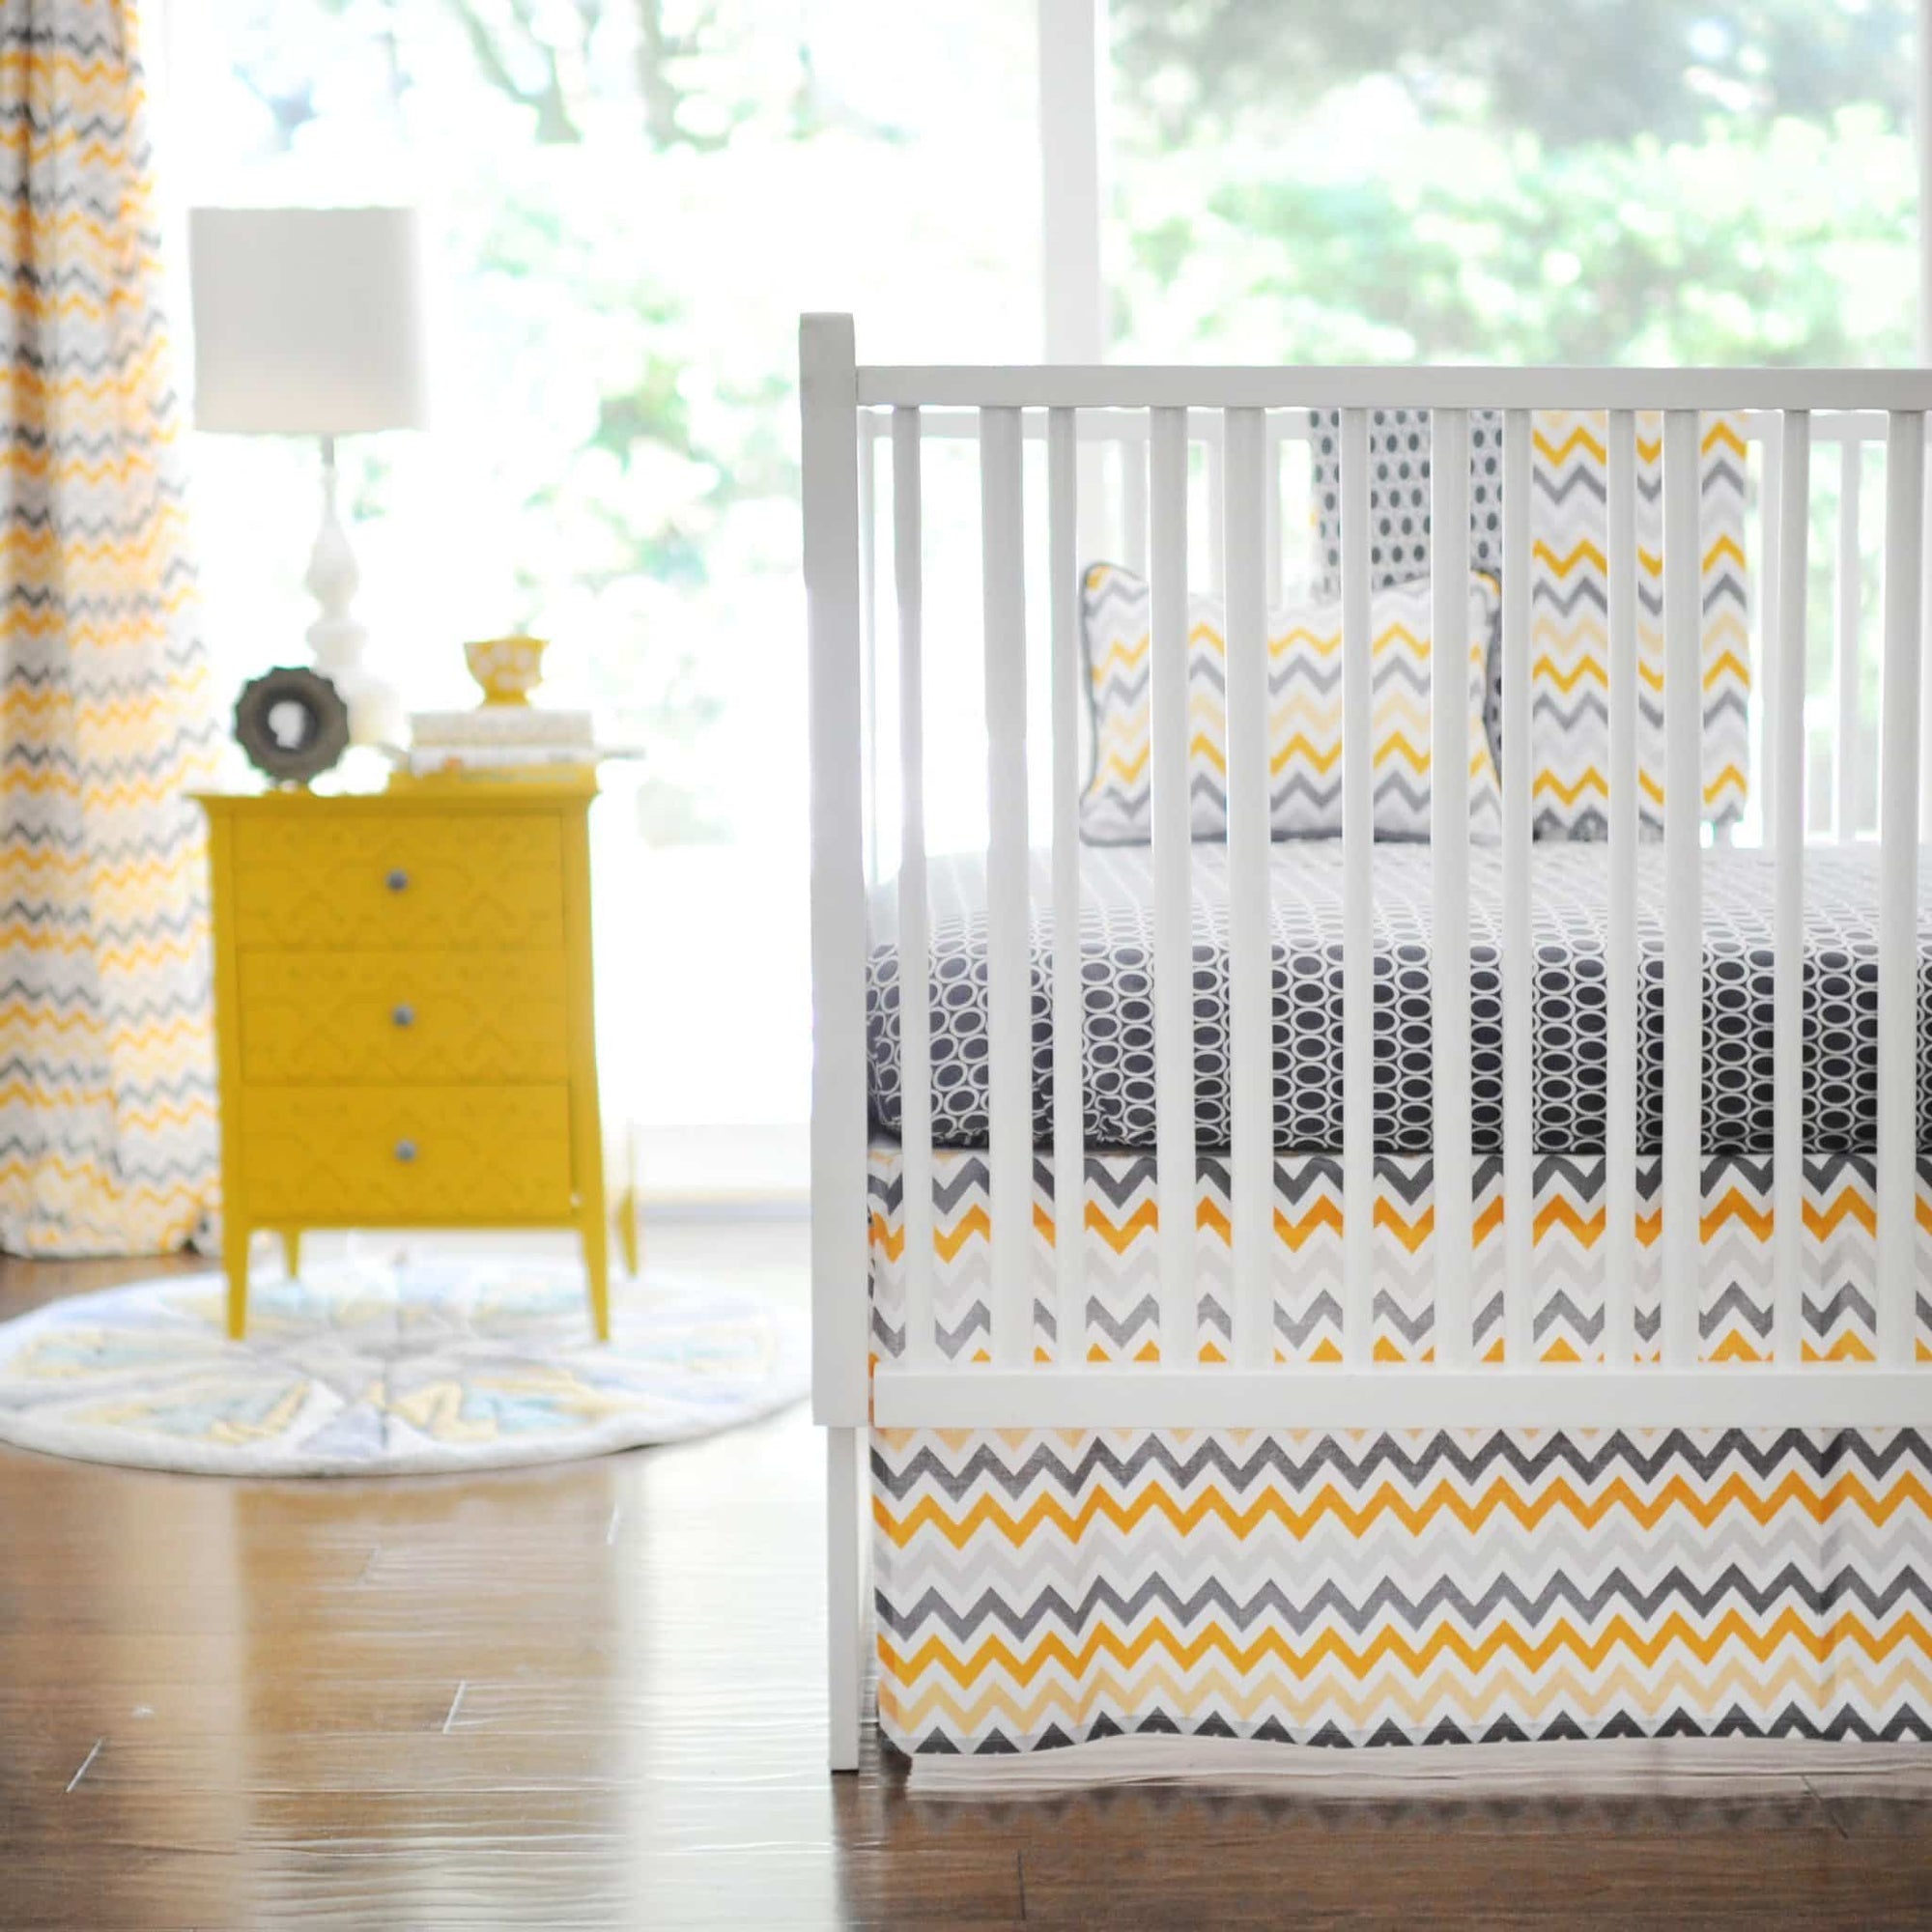 yellow crib bedding